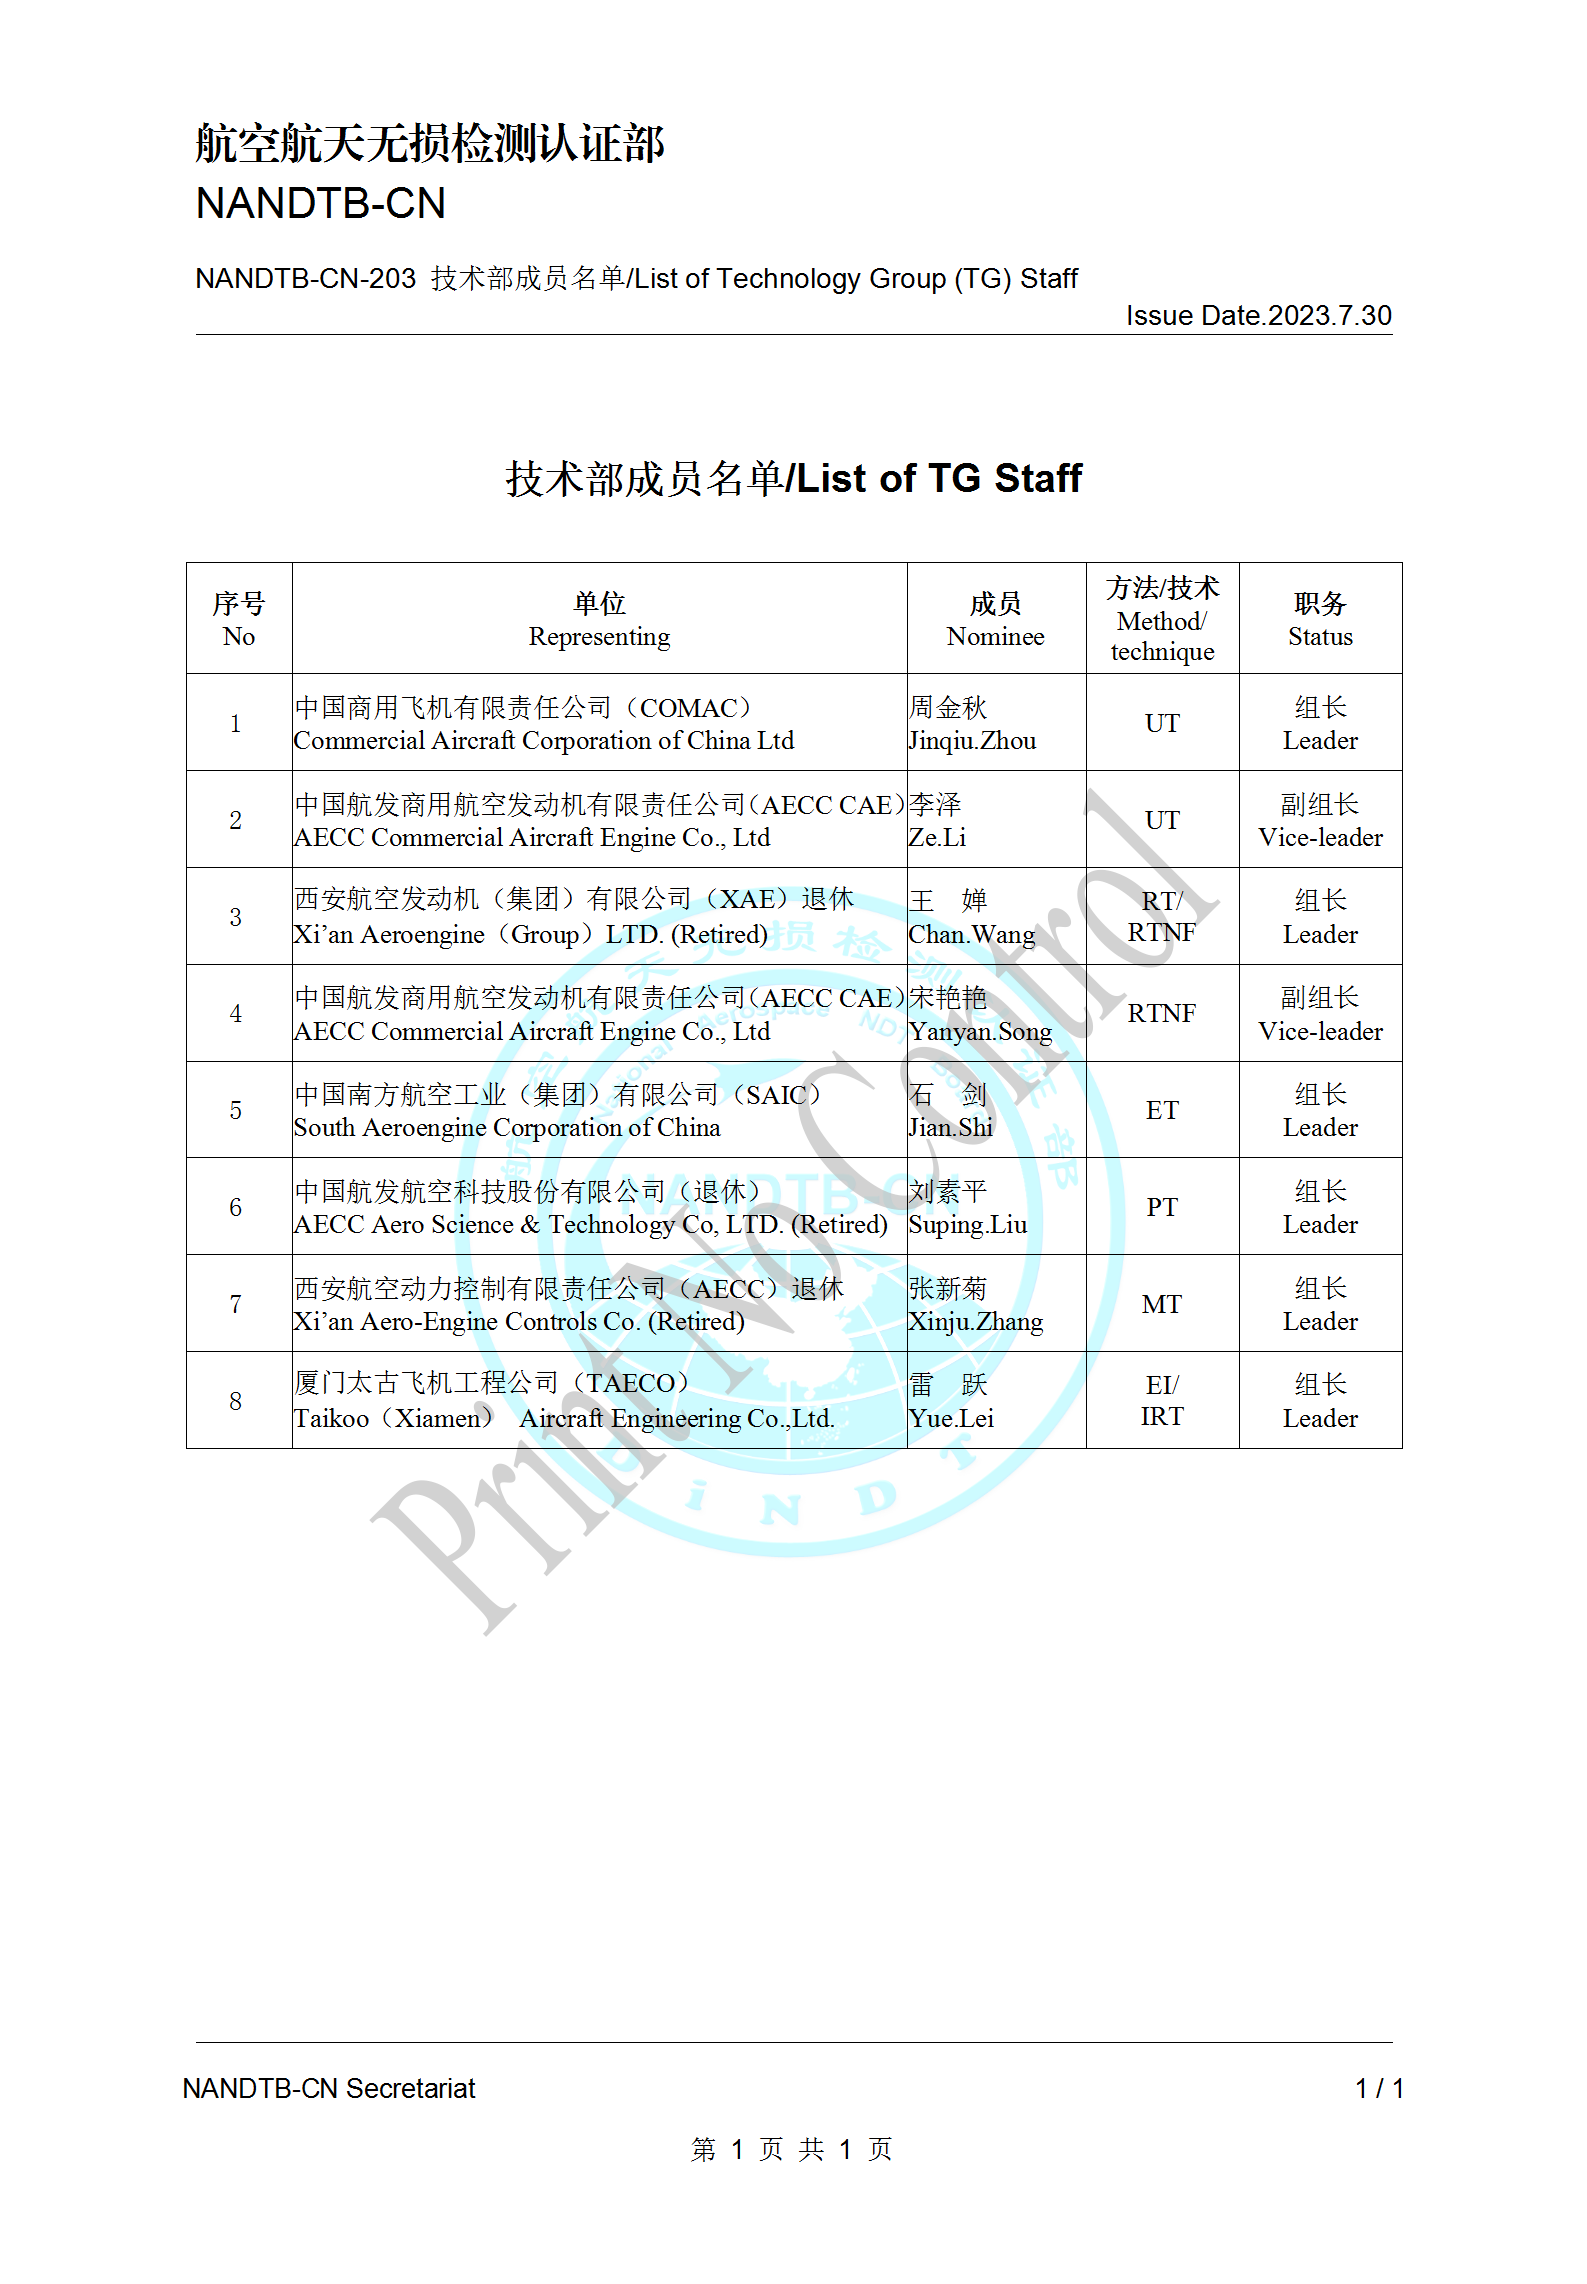 2.3 NANDTB-CN-203《技术部成员名单》2023.7.30.png